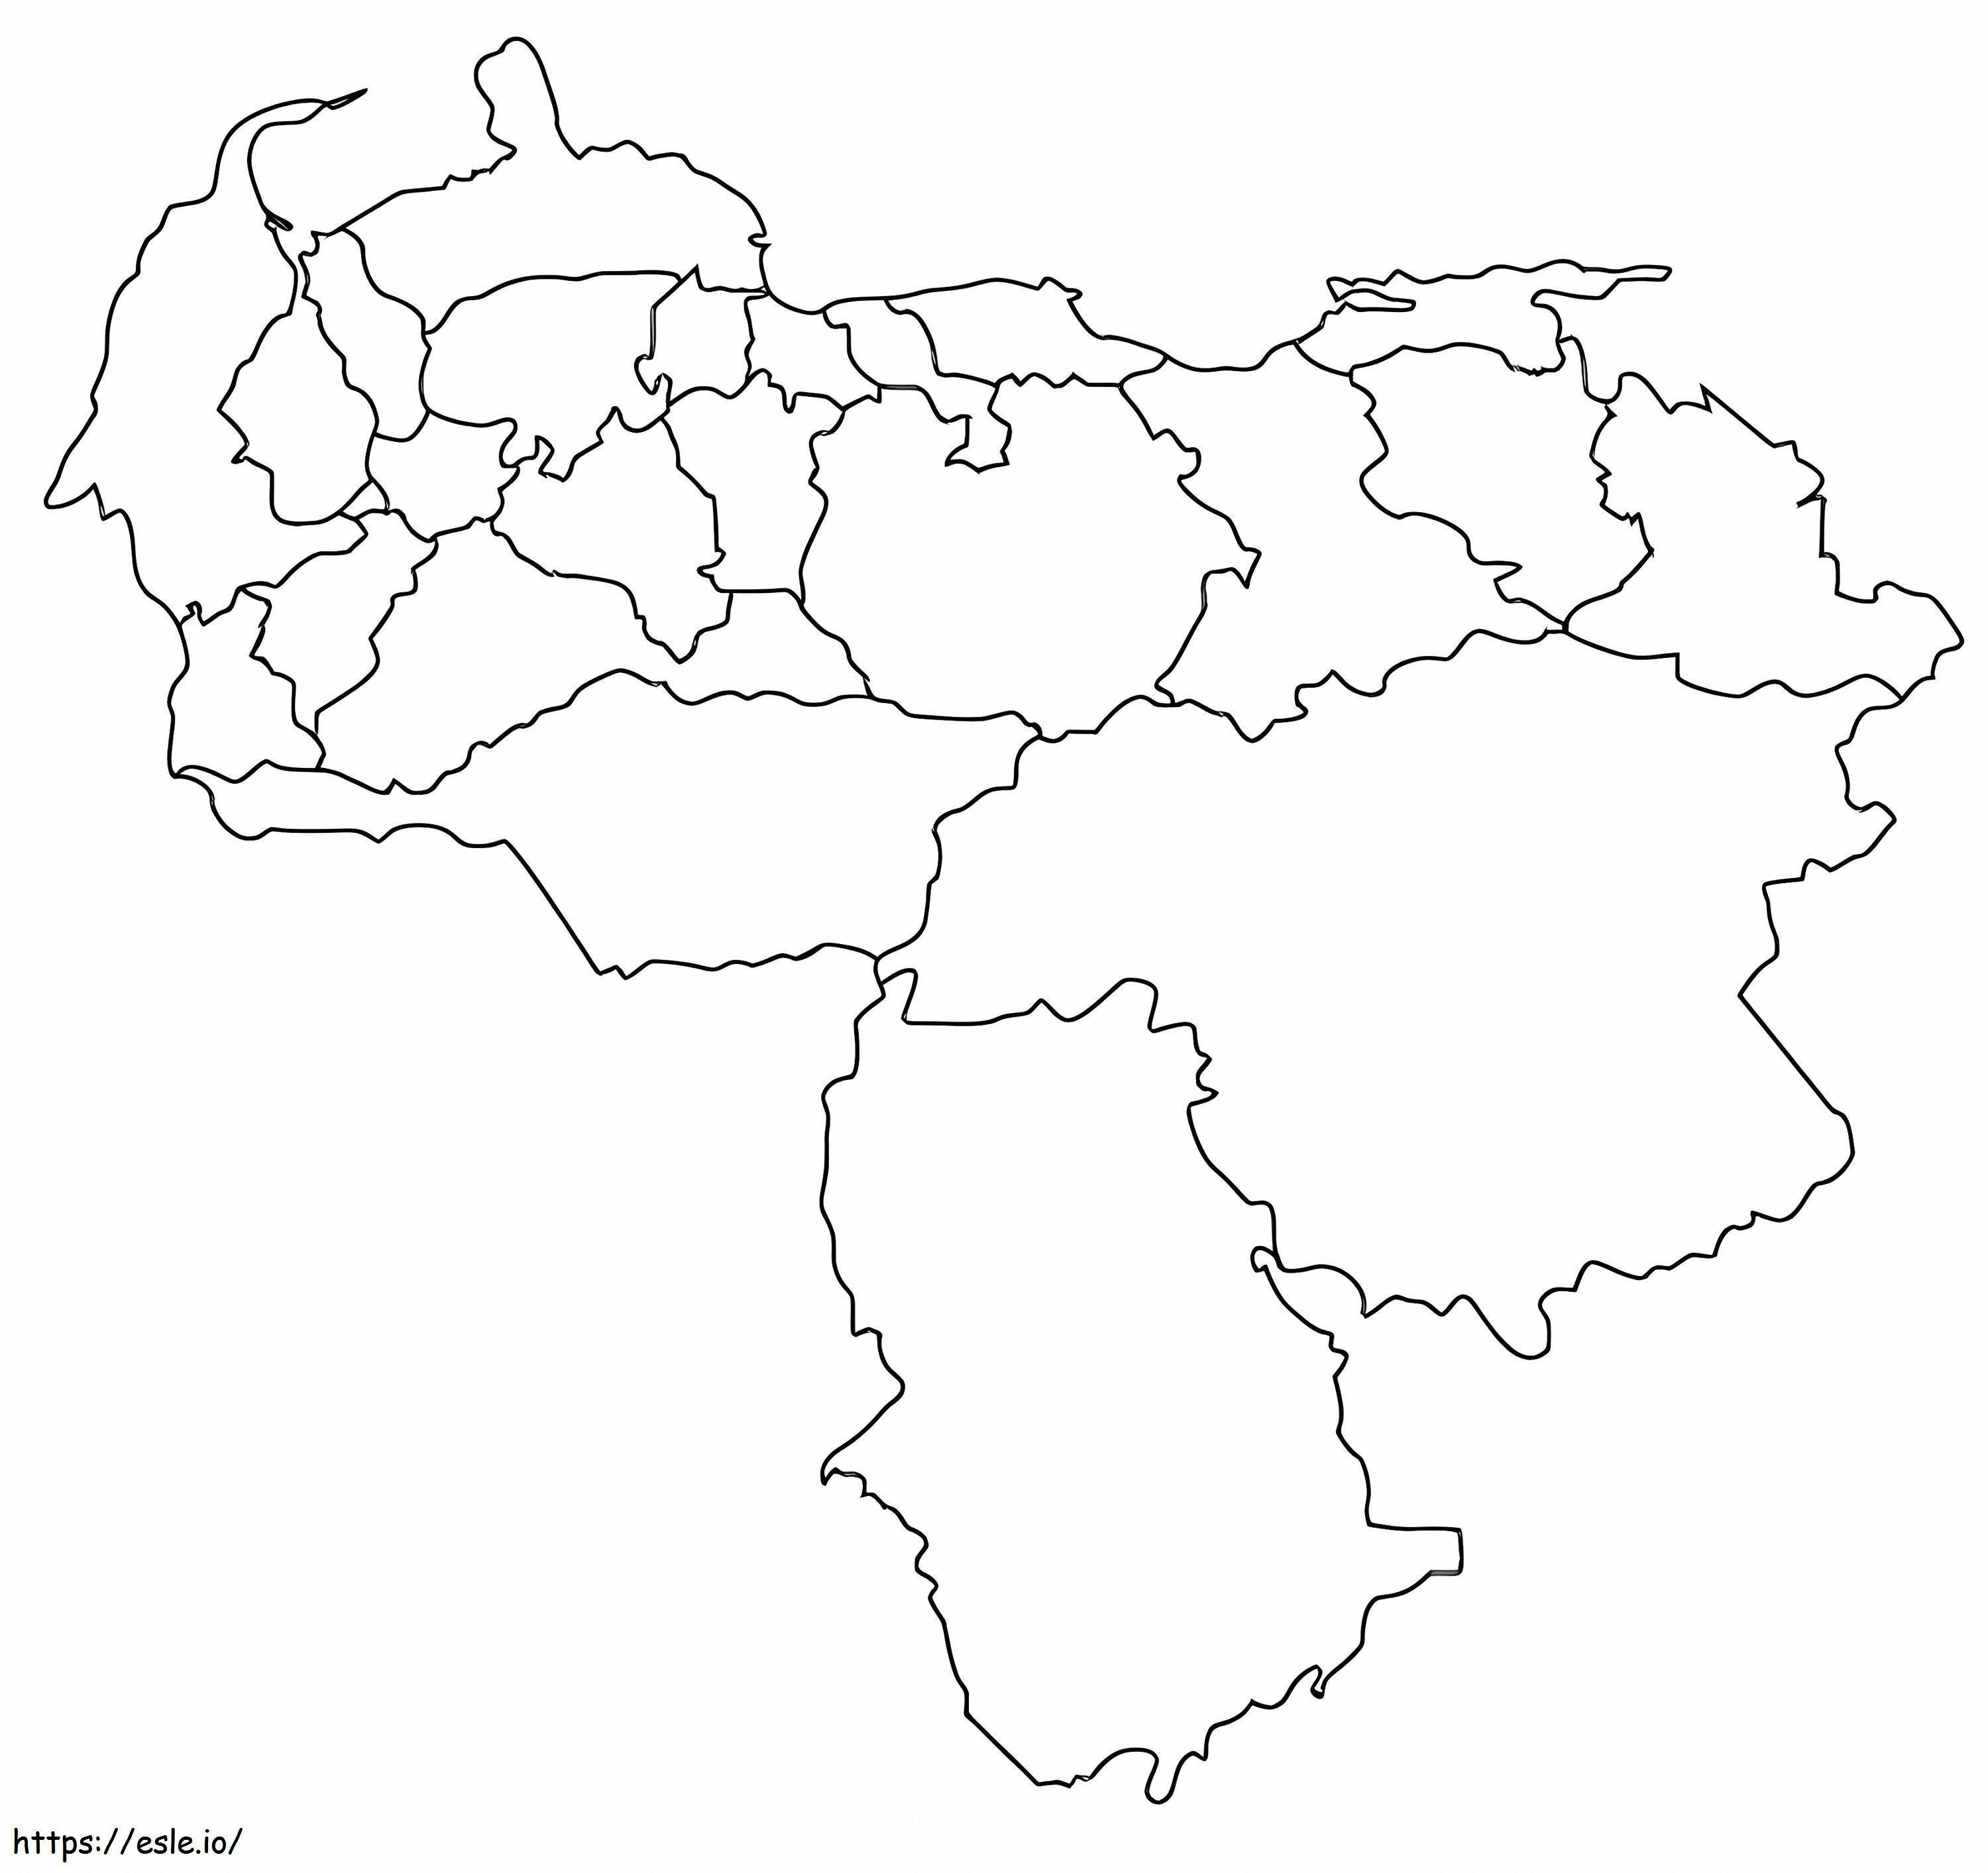 Mapa da Venezuela para colorir